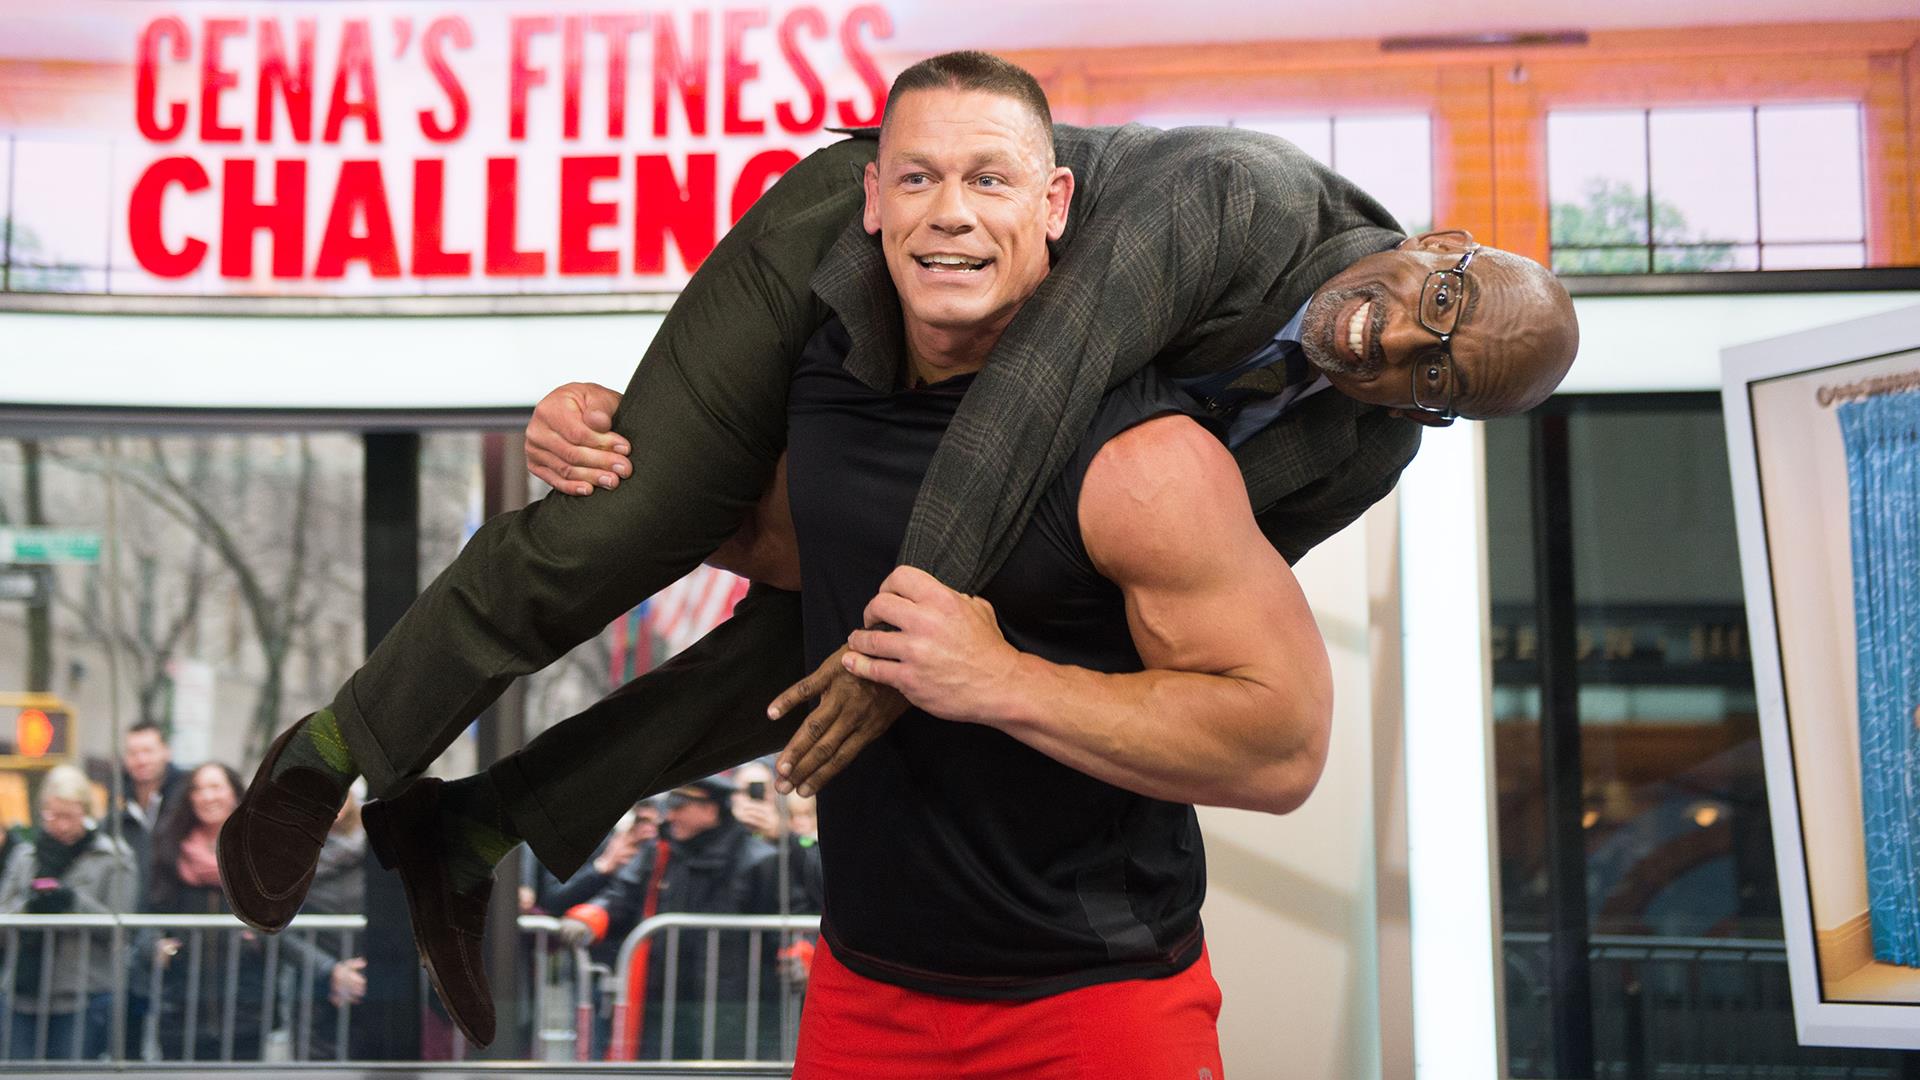 John Cena demonstrates quick fitness moves (and hoists Al Roker!)